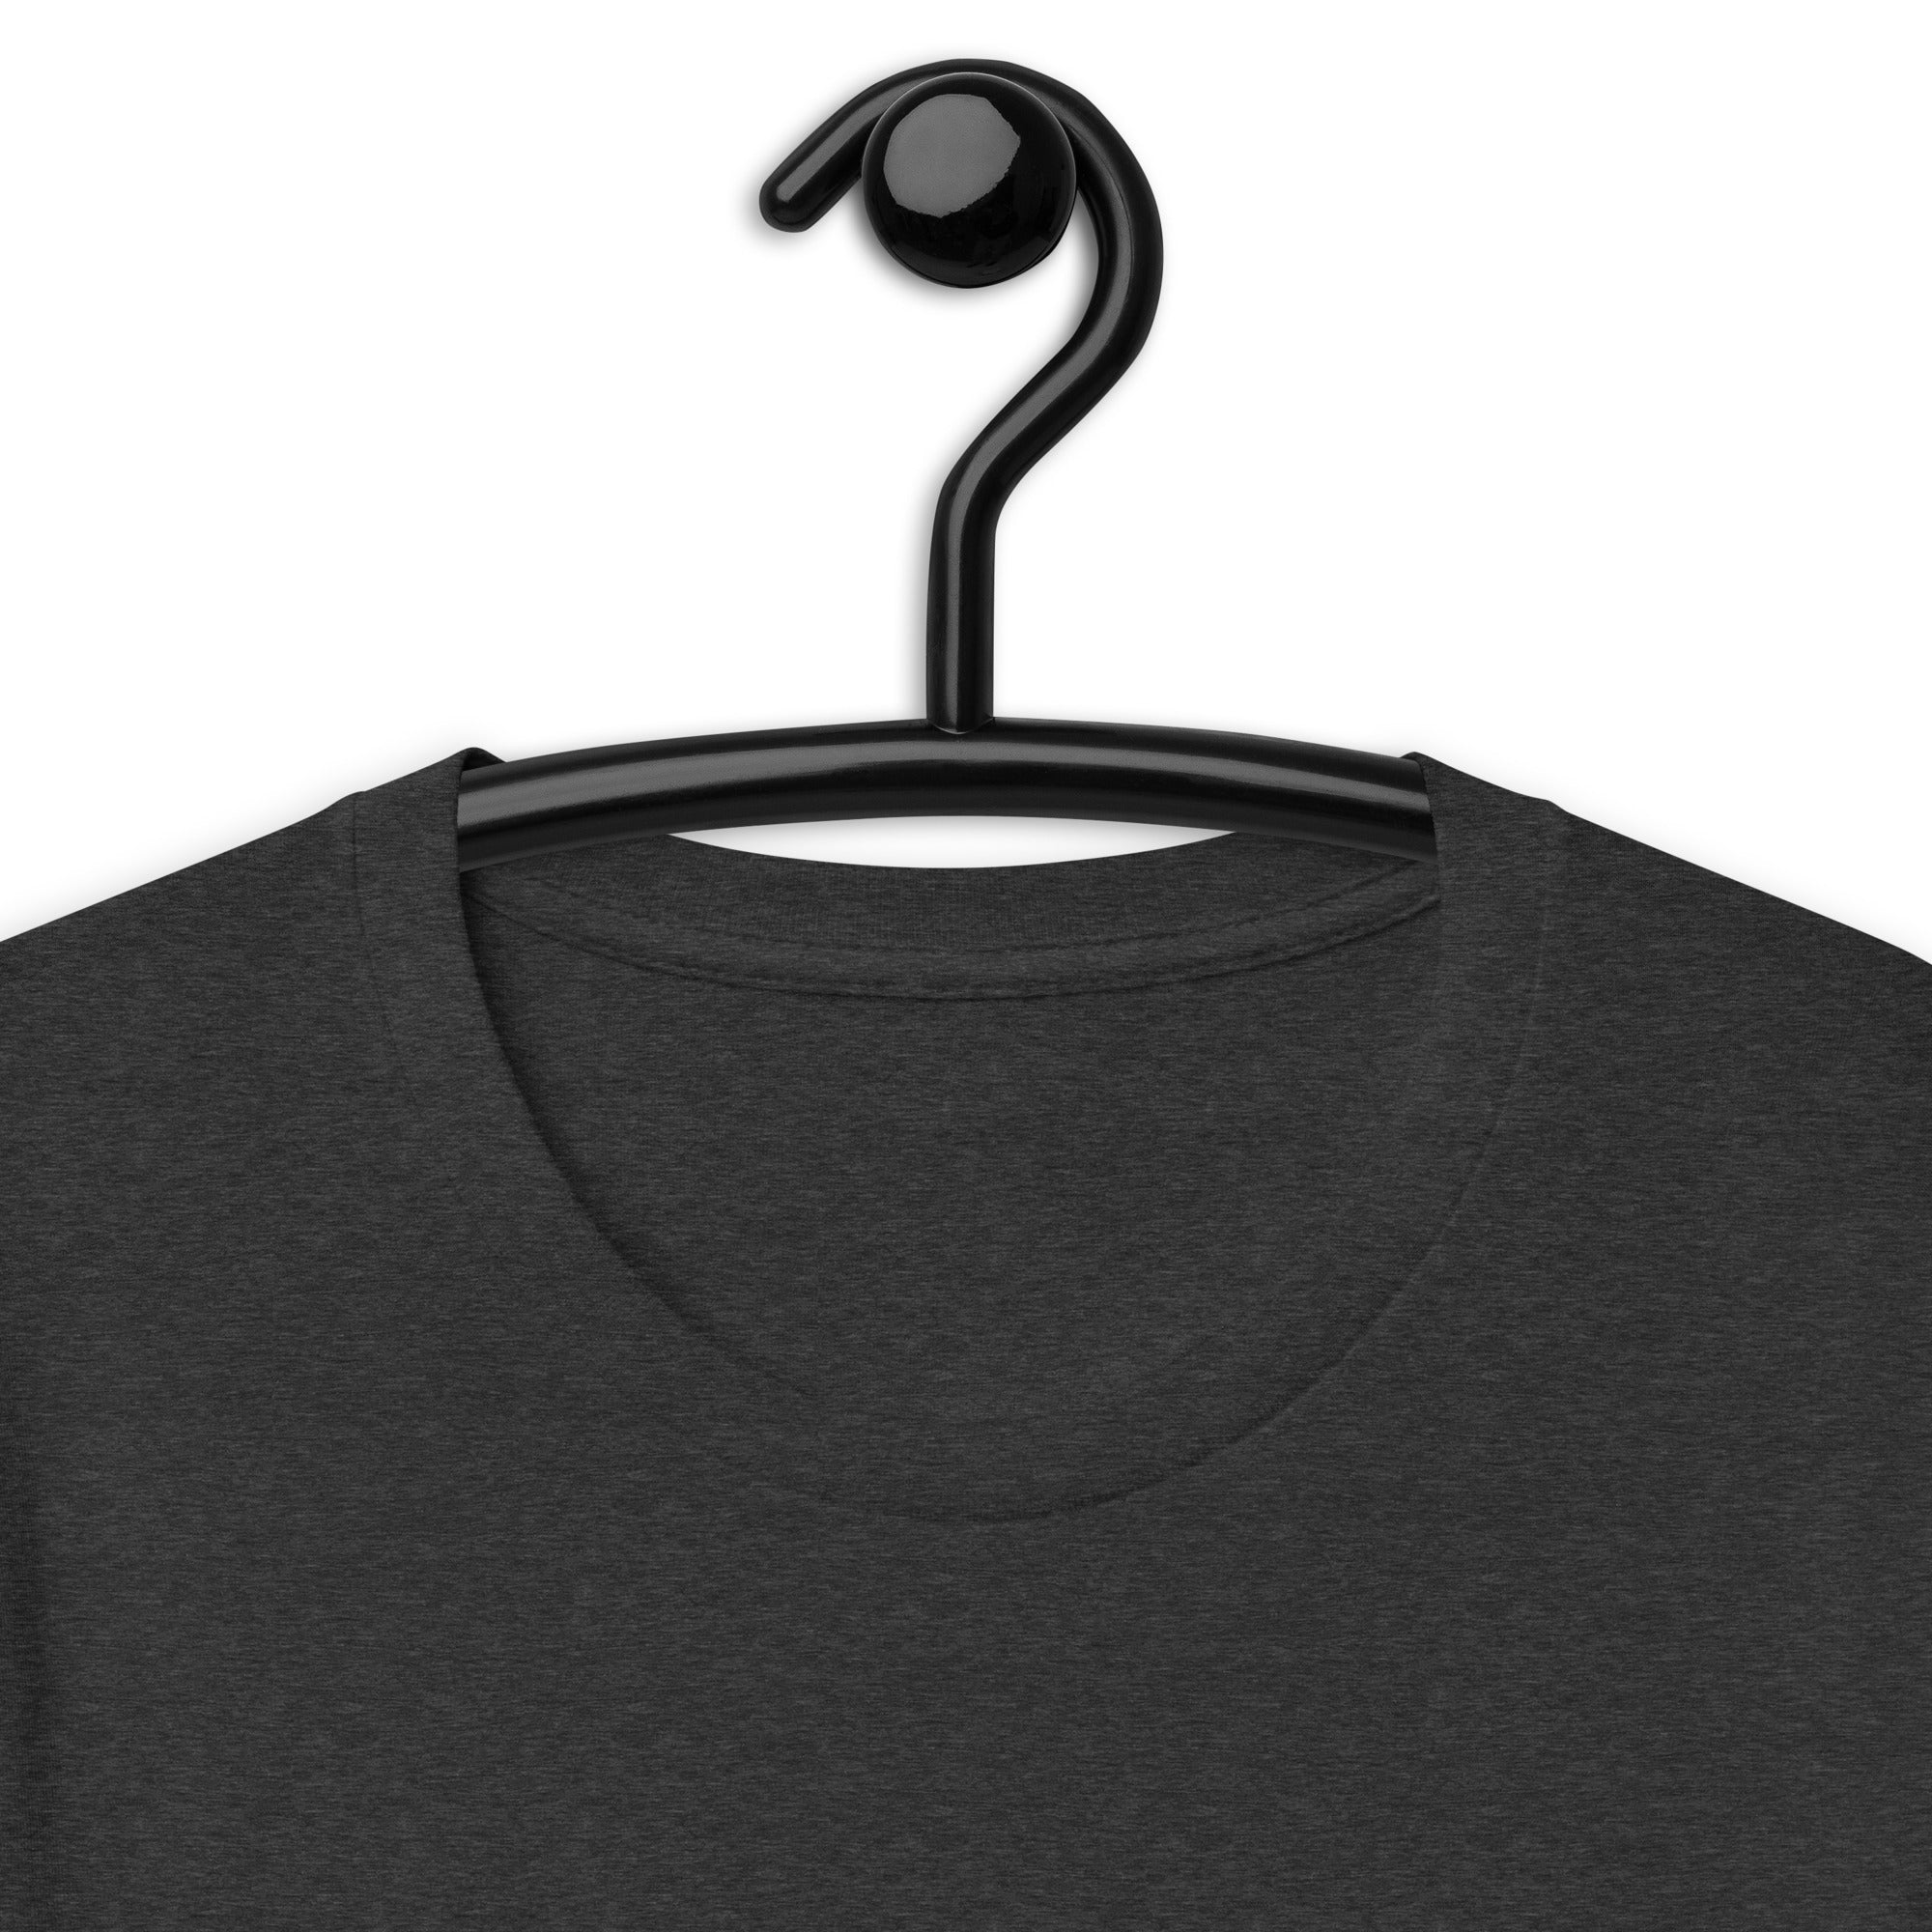 Unisex t-shirt | Monoply